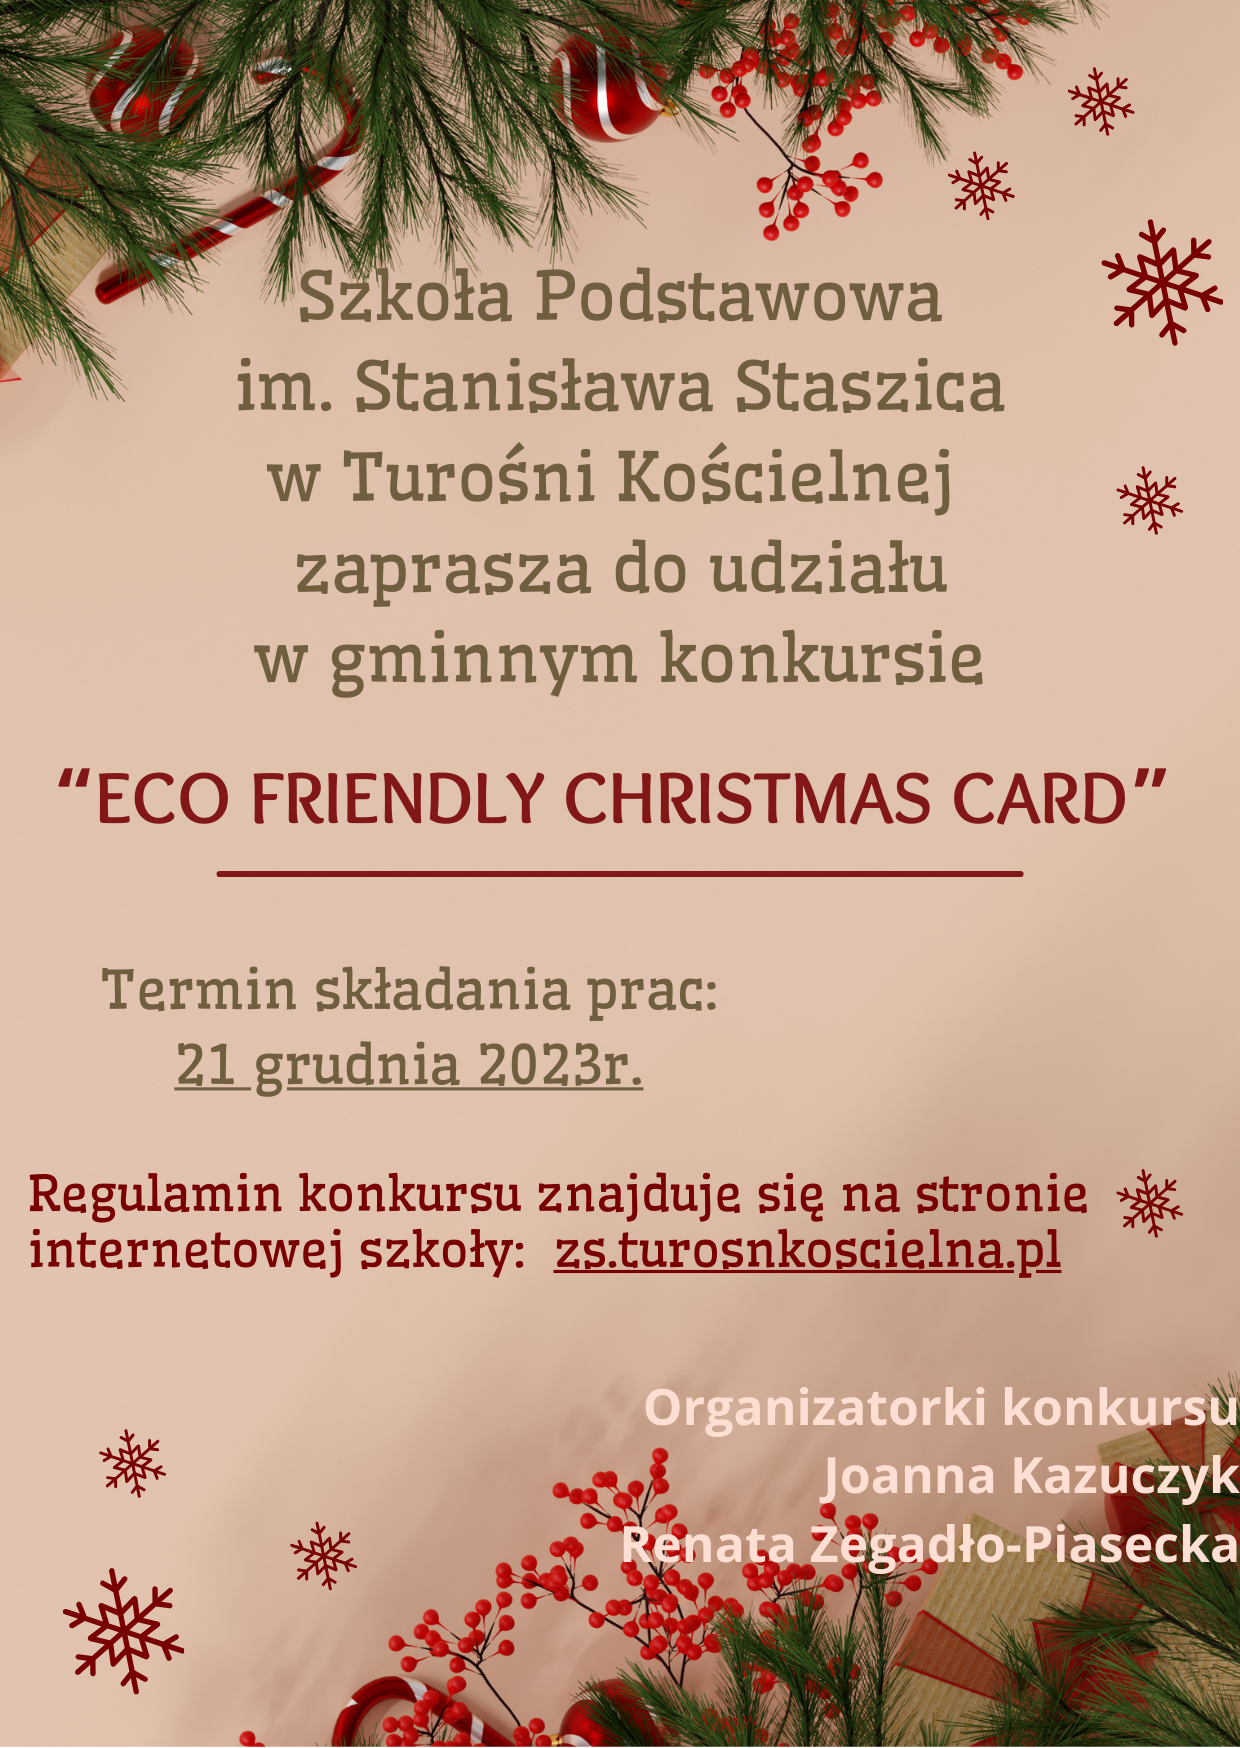 Eco friendly Christmas Card plakat konkursowy